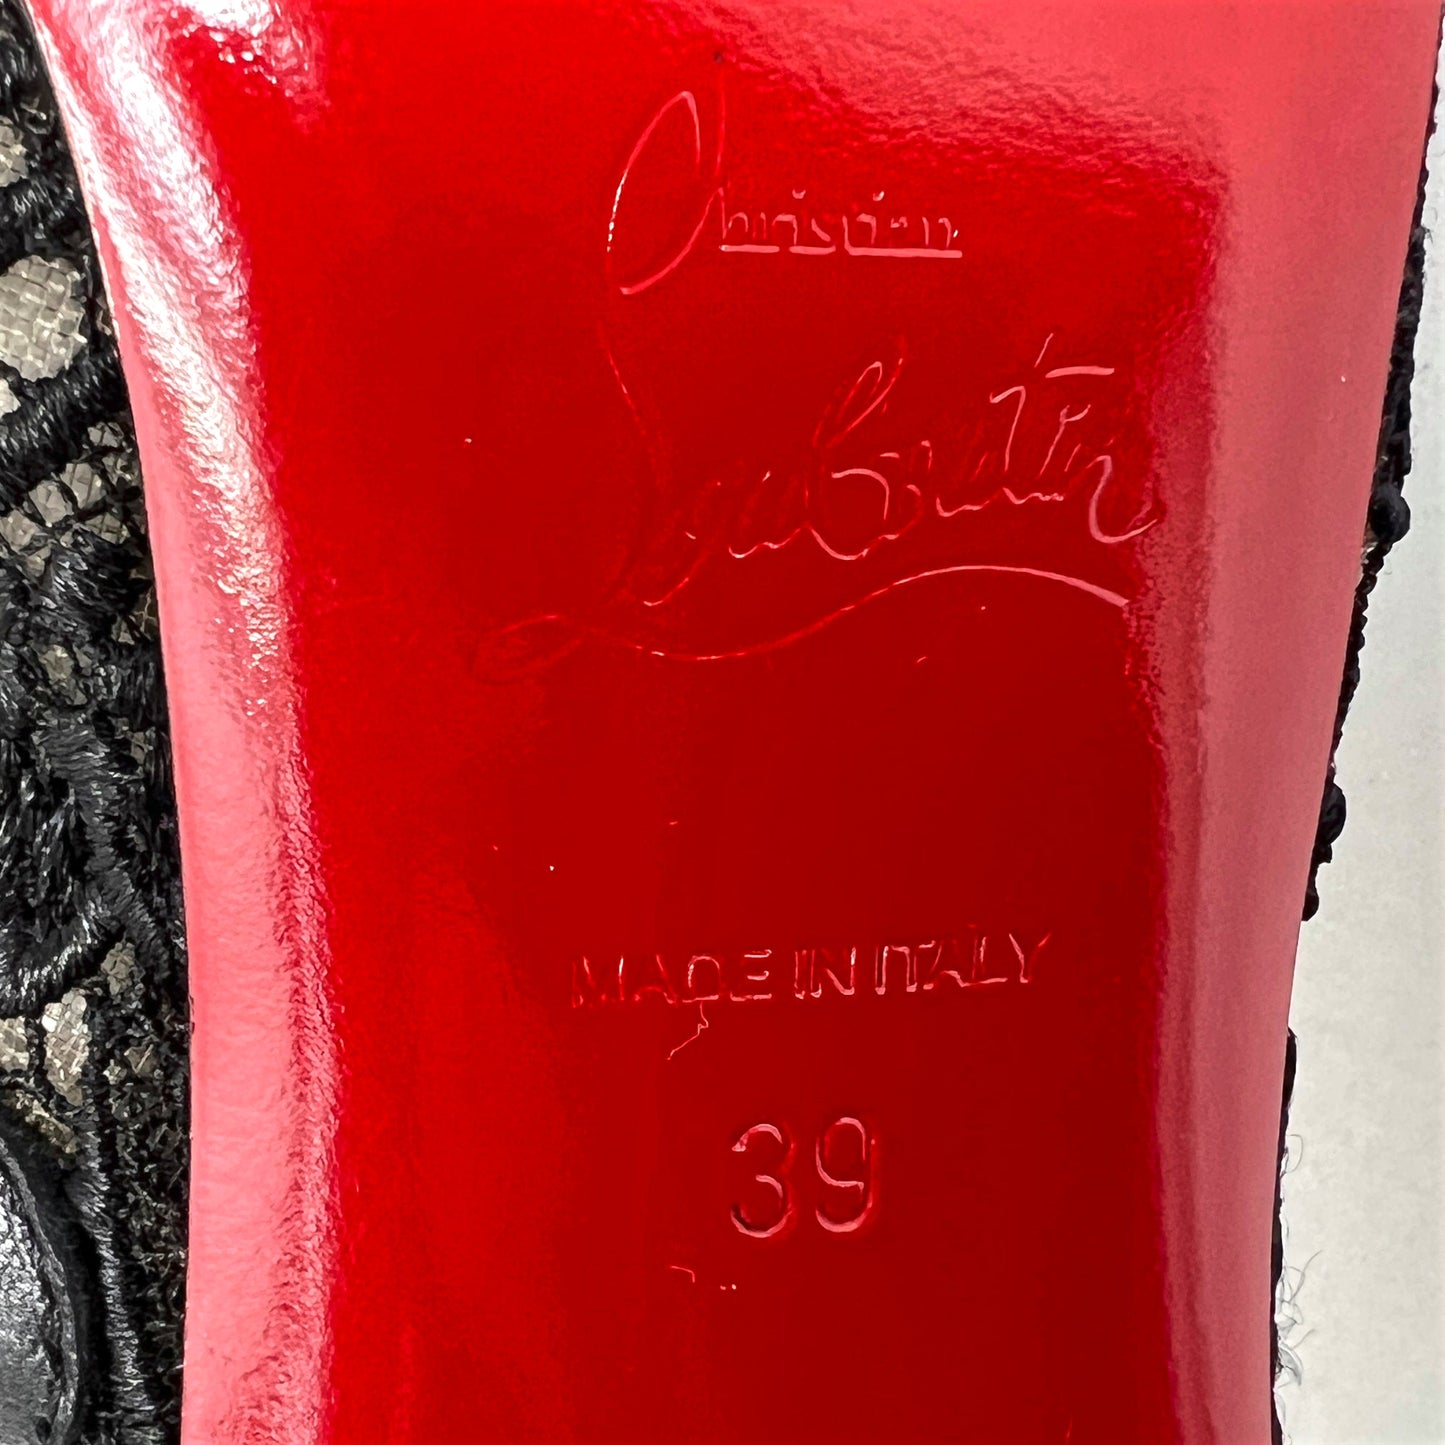 Christian Louboutin Tennissima 100 Black Guipure Lace Mesh Tall Knee High Boots Size EU 39